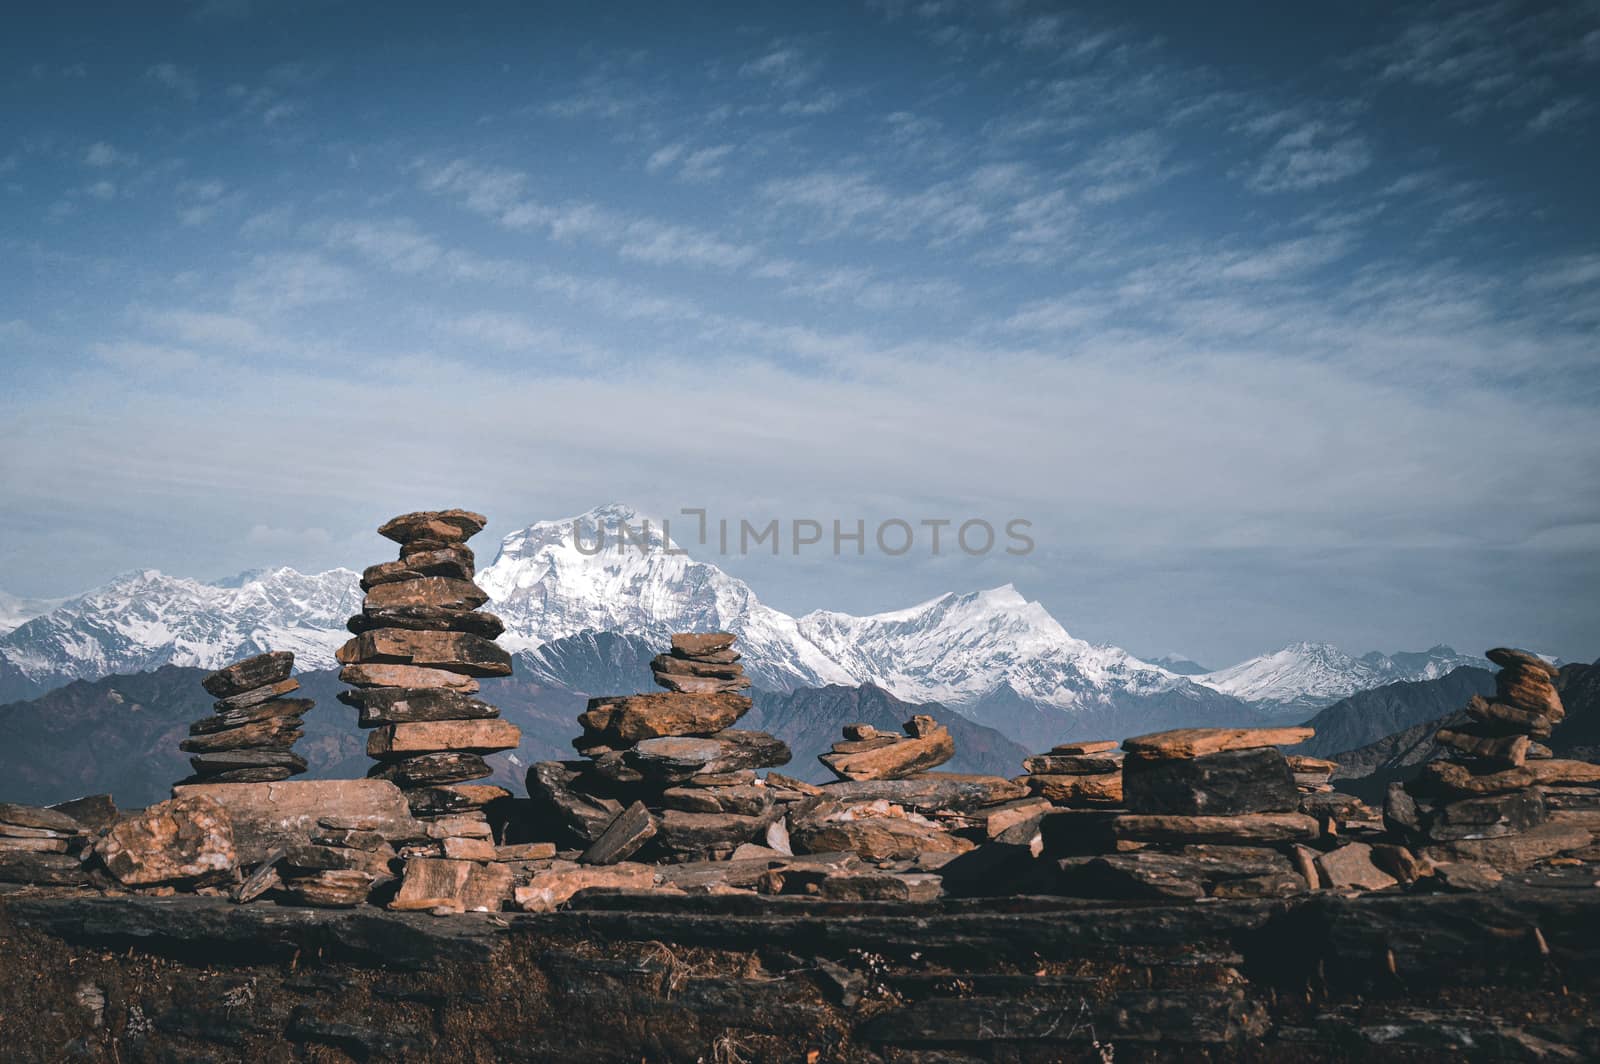 Treeking Annapurna Base Camp by Sonnet15